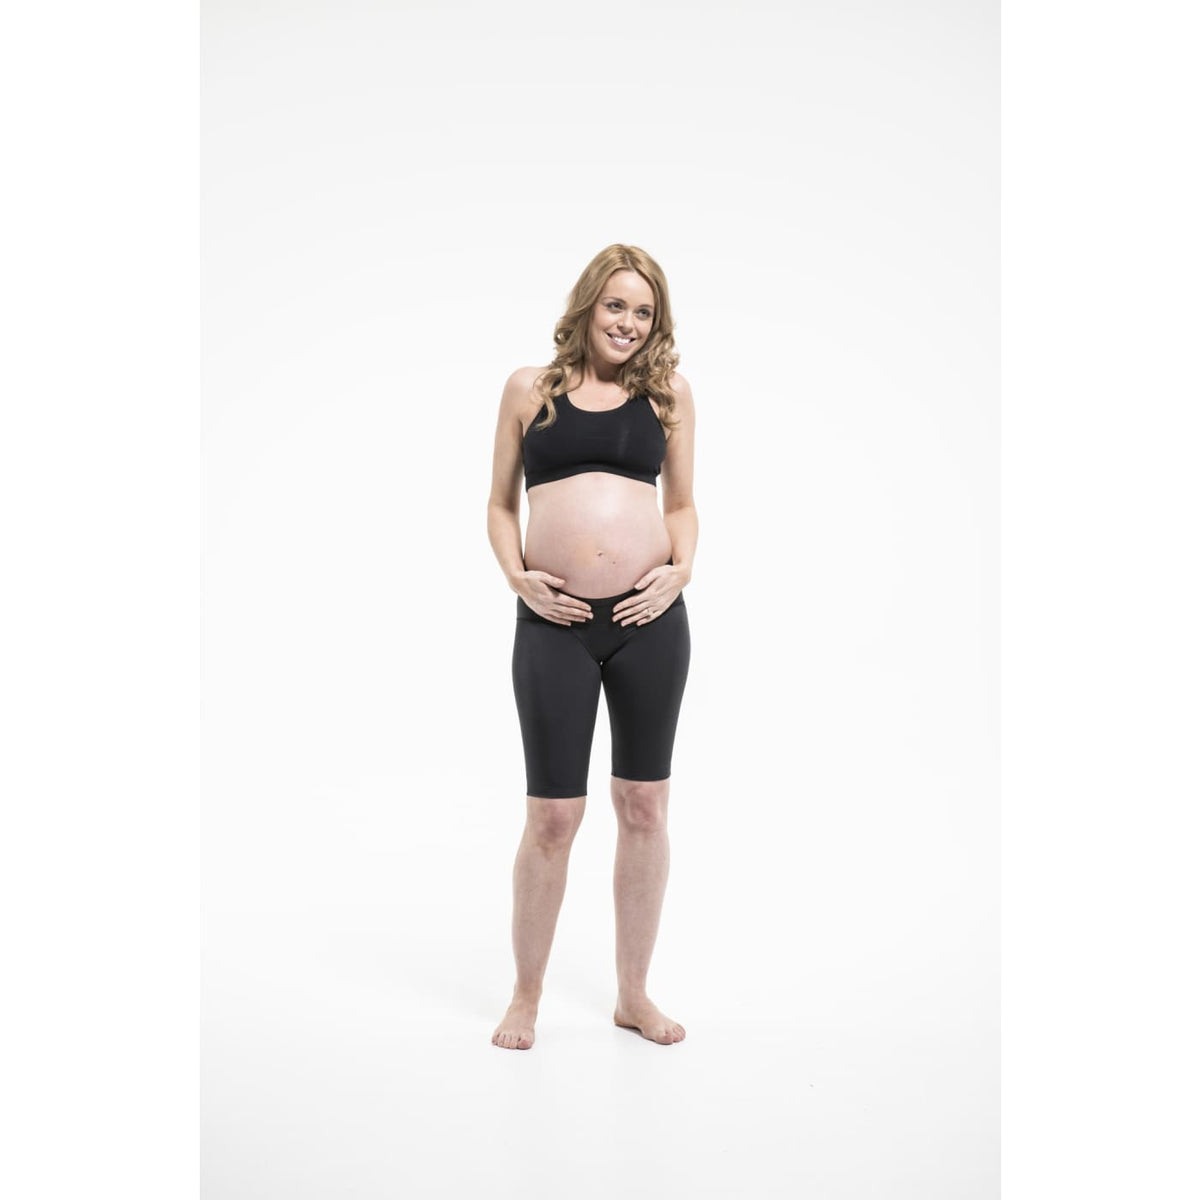 SRC Pregnancy Shorts - Black S - FOR MUM - MATERNITY SUPPORT GARMENTS (PRE/POST)